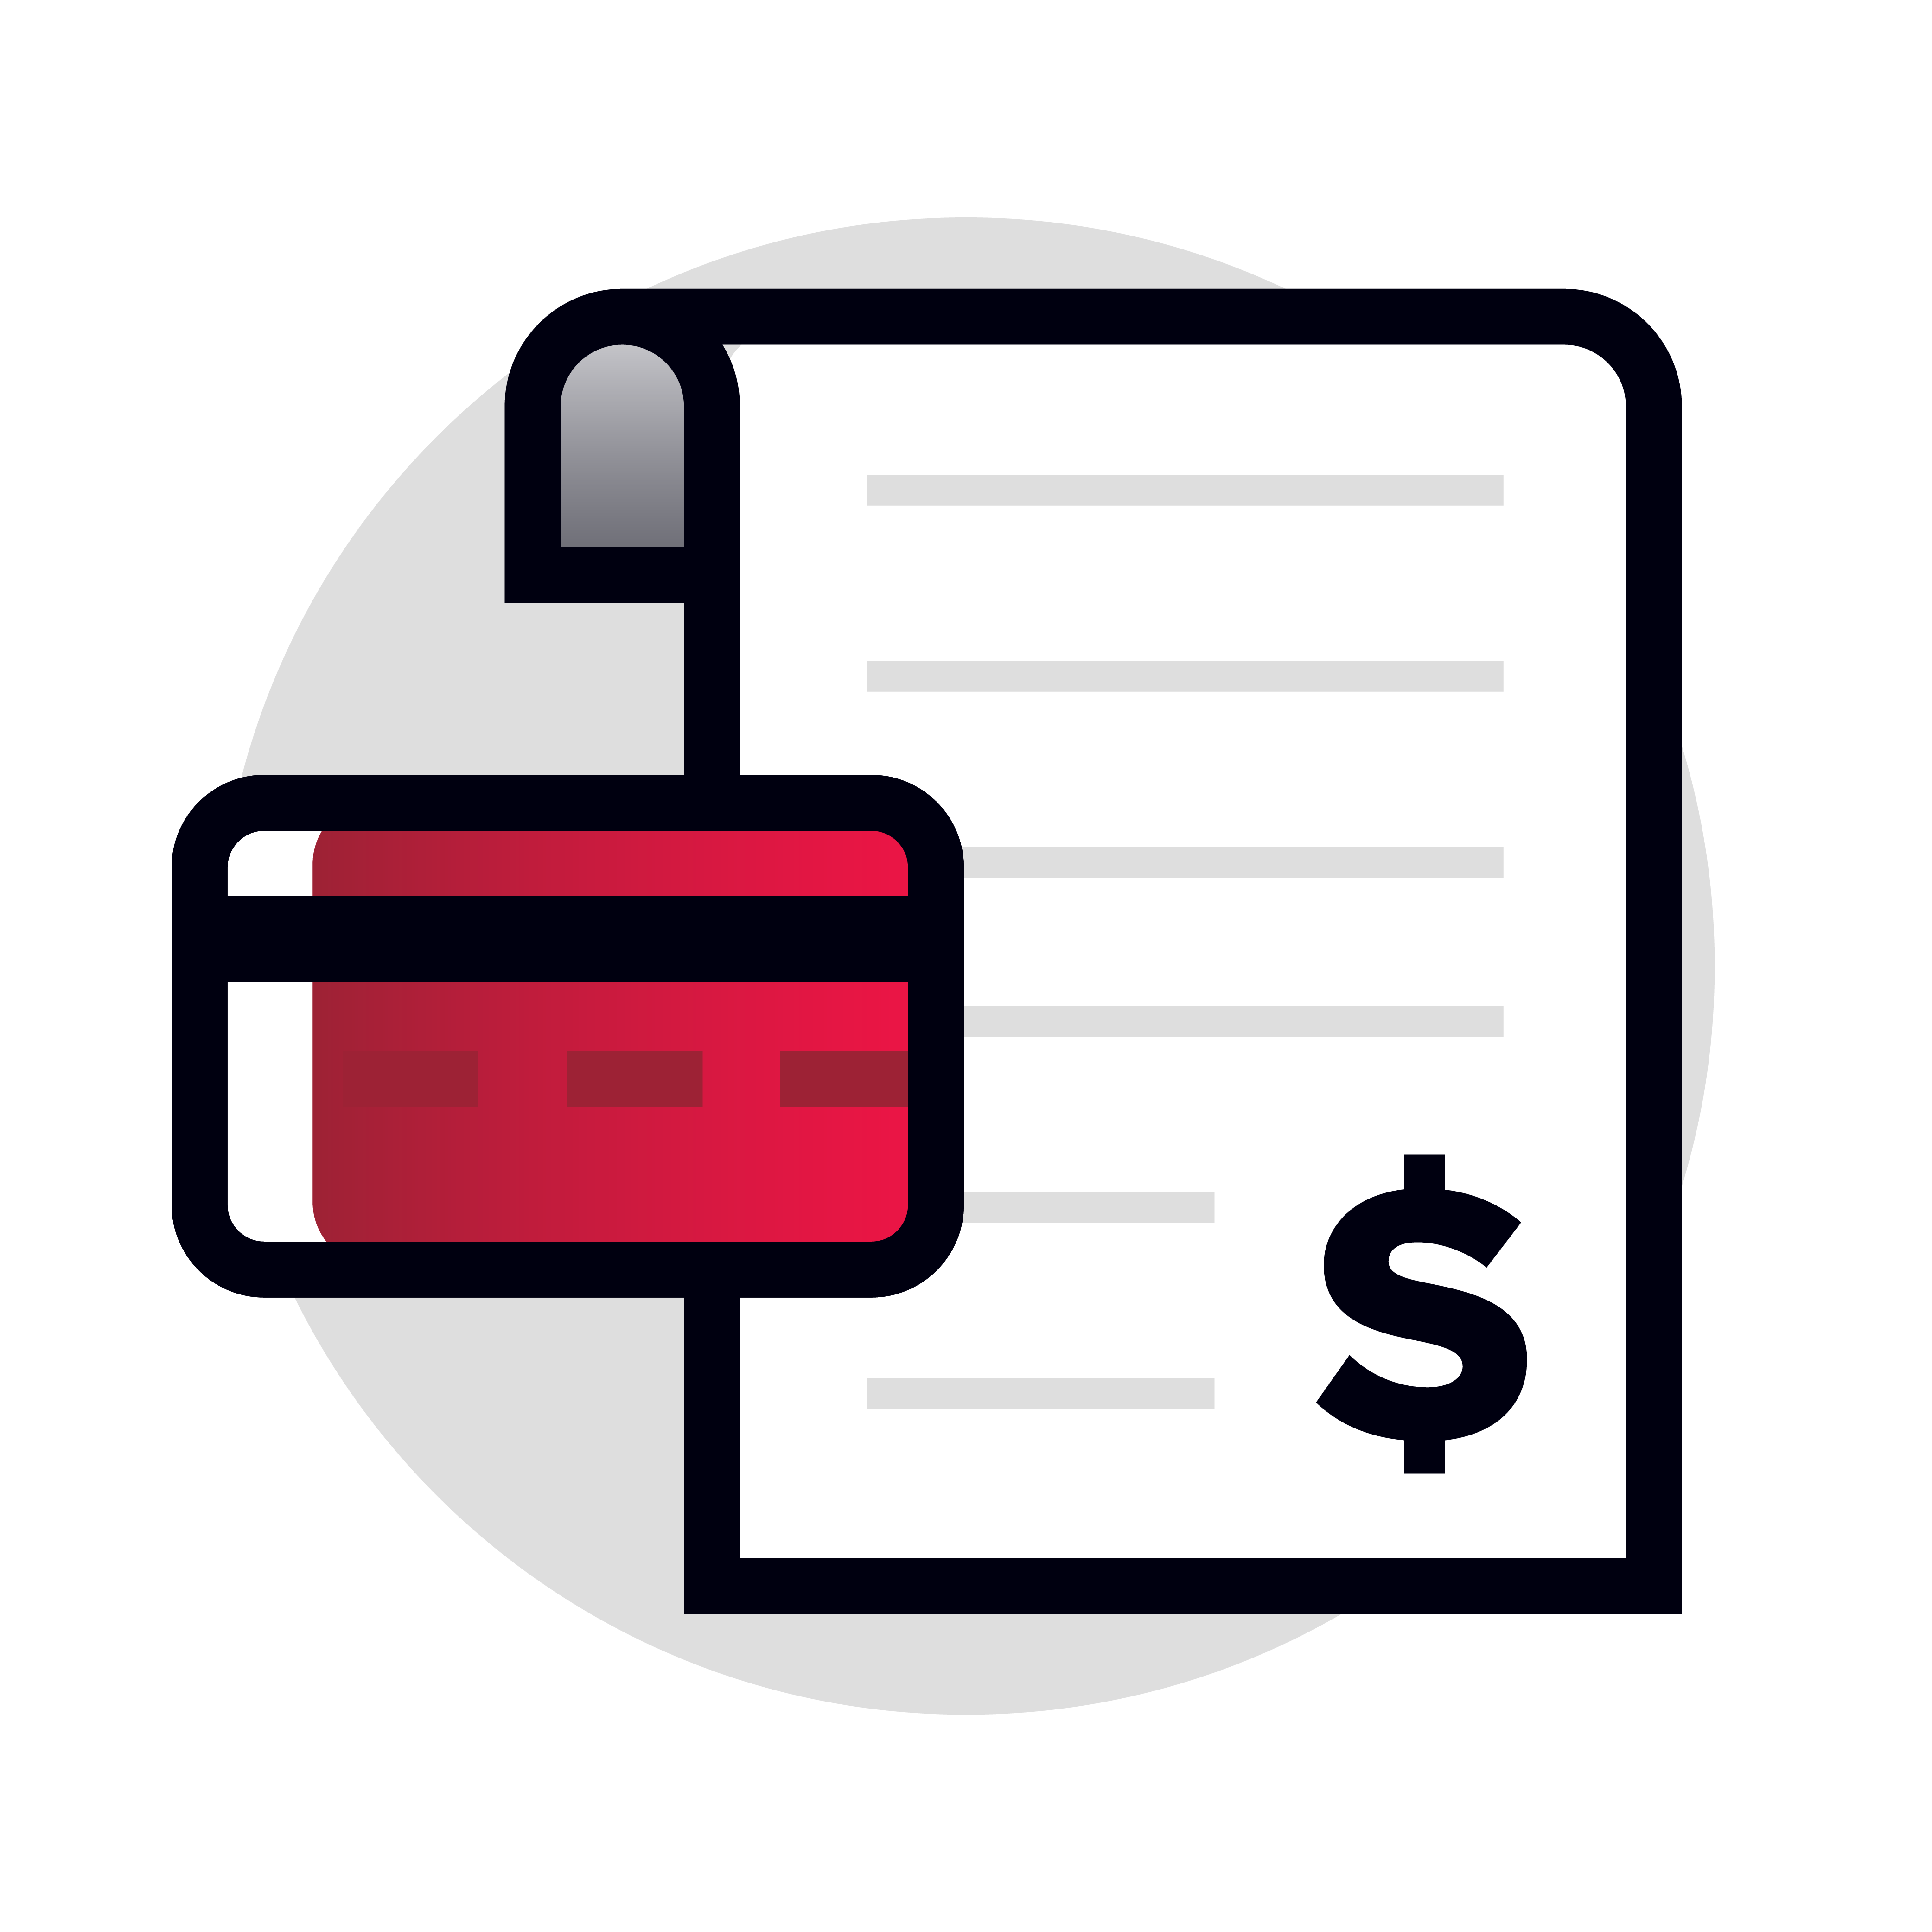 Bill_Pay logo